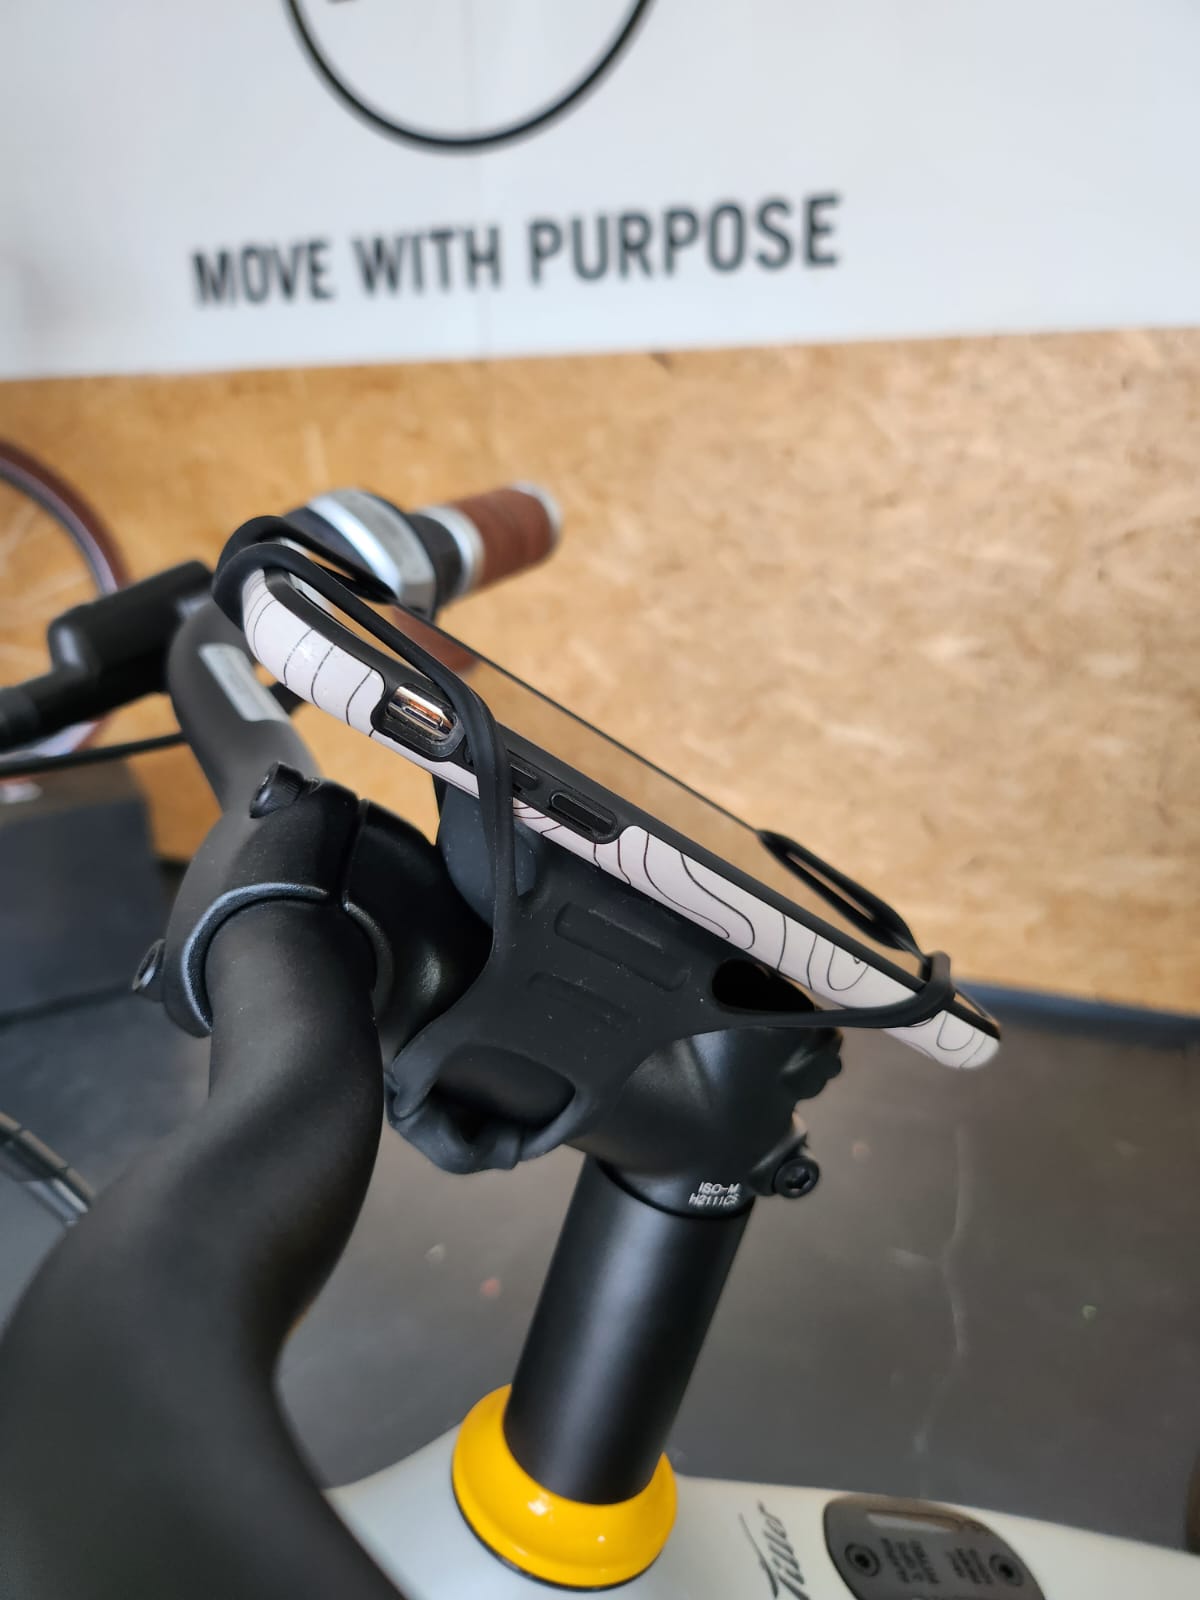 E-Bike Soft mount phone holder